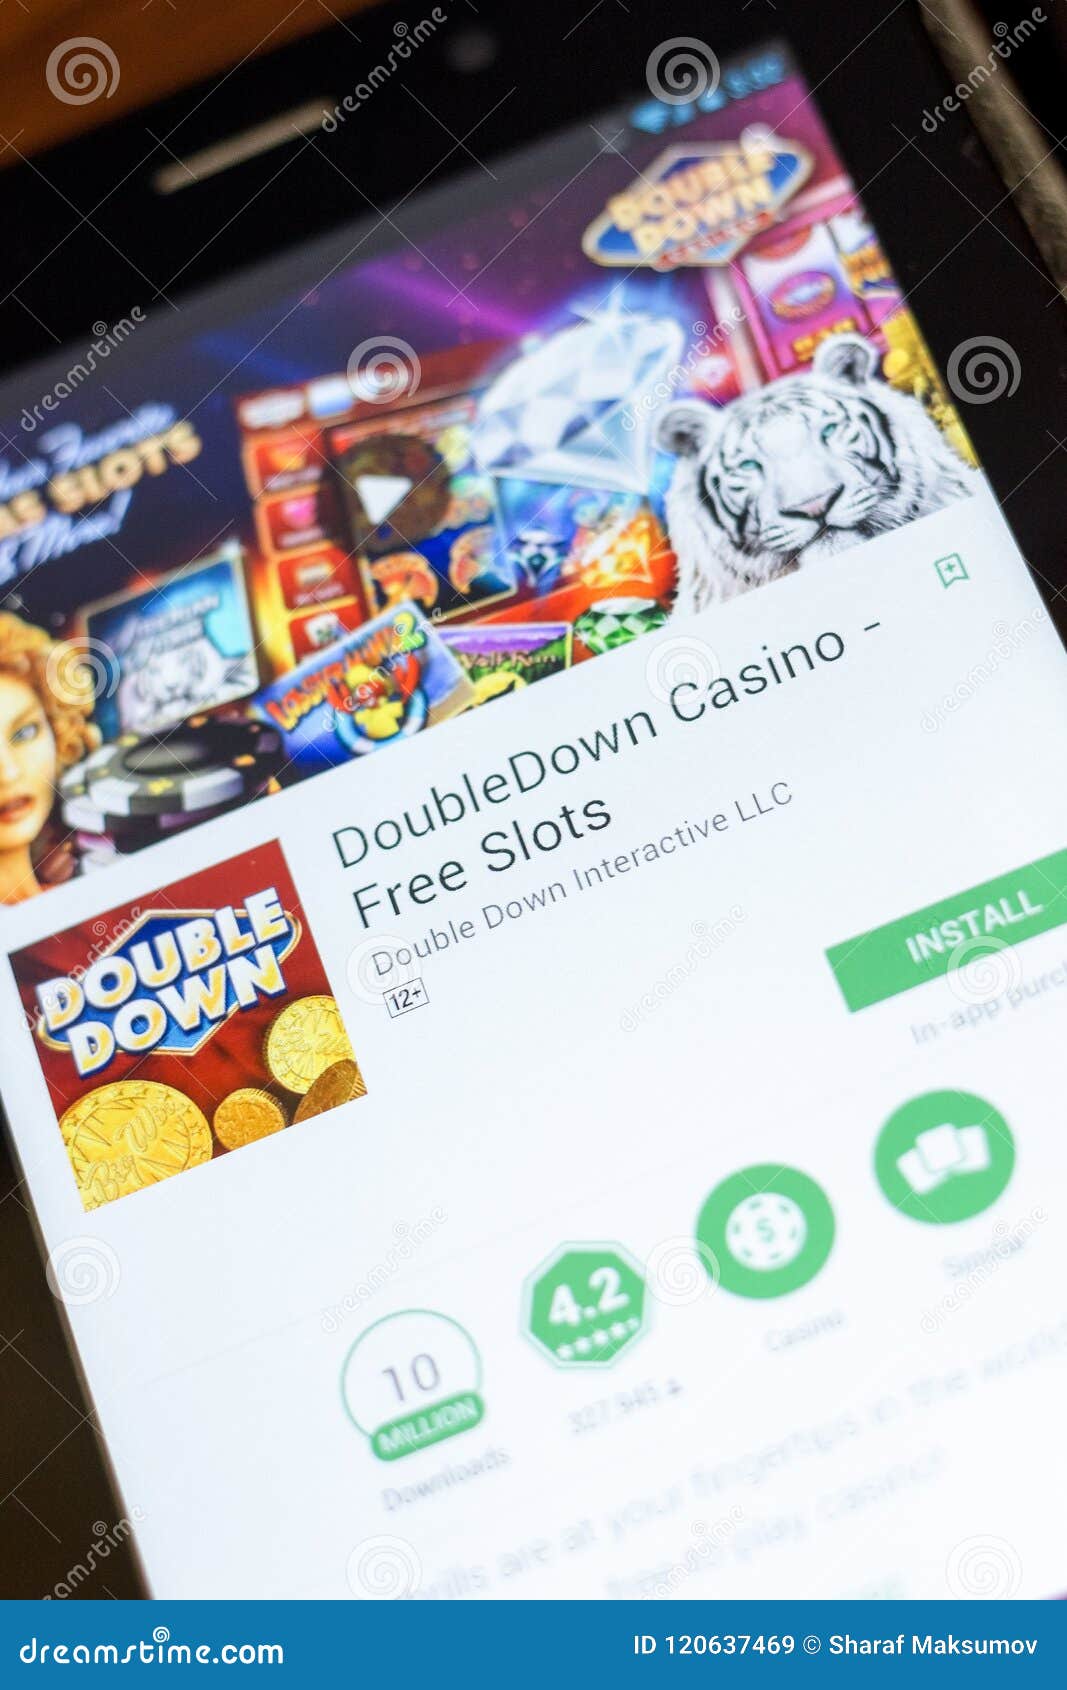 doubledown casino free slots app